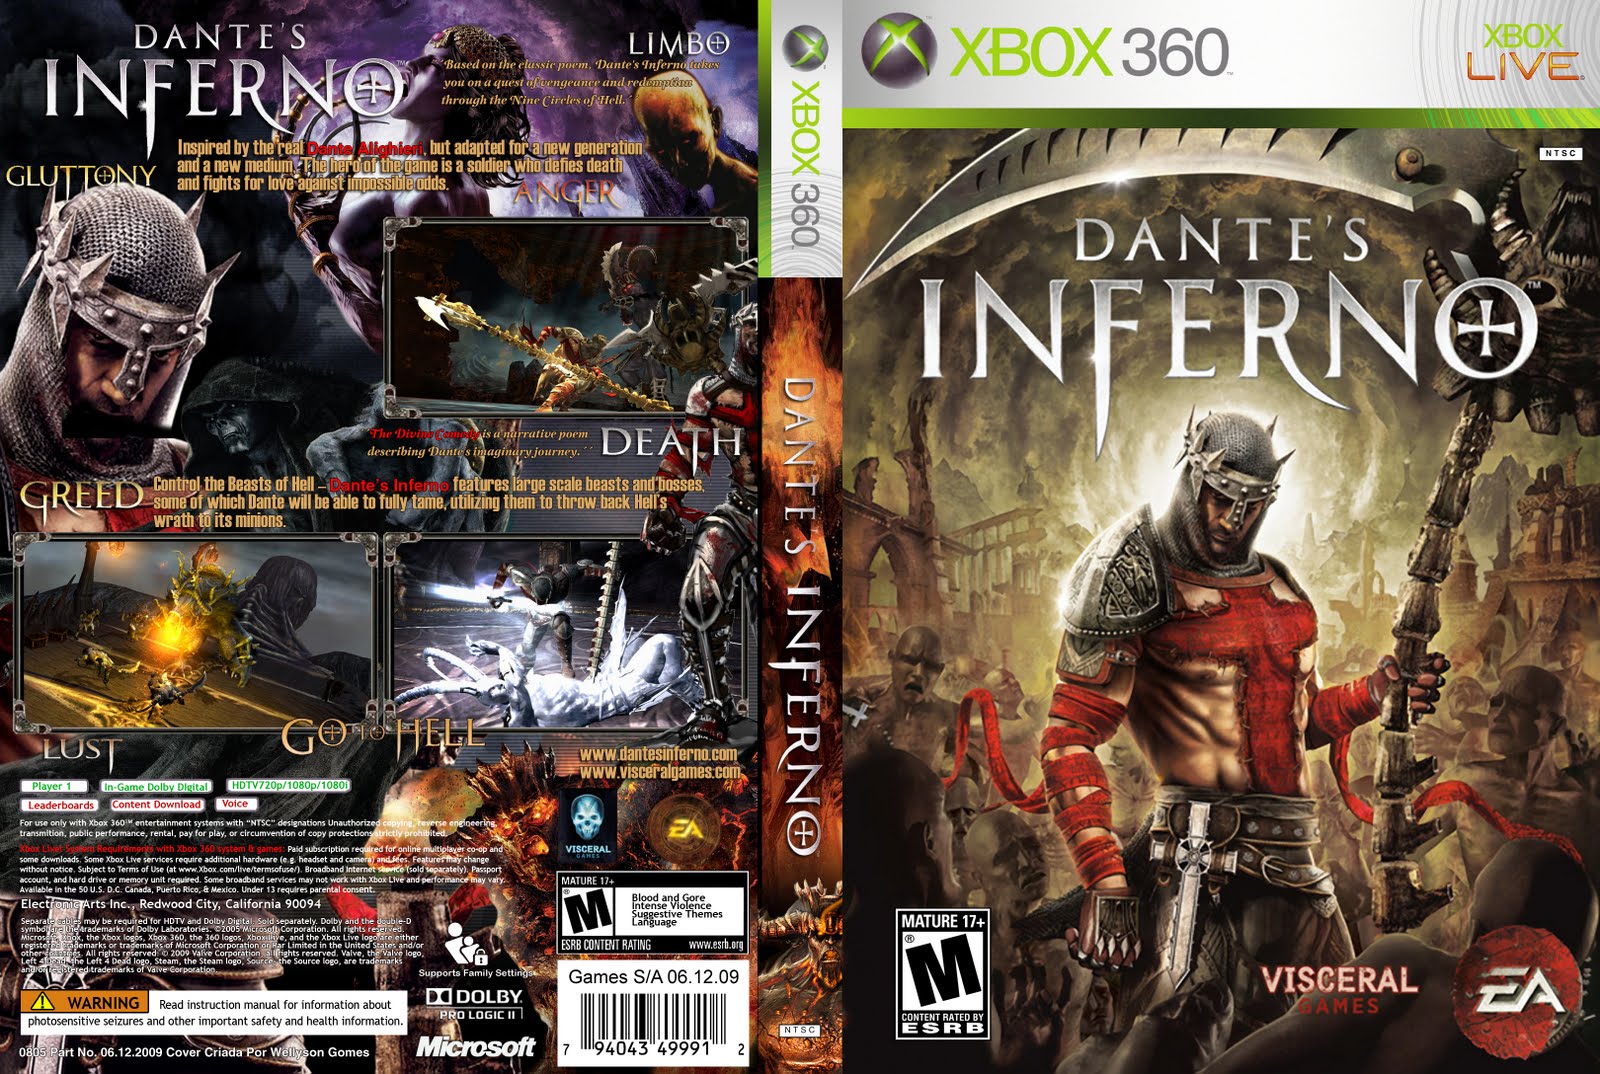 Xbox 360 games download. Дантес Инферно 2 на Xbox. Игра Dante’s Inferno для Xbox 360. Данте Инферно на Xbox 360. Ад Данте игра на Xbox 360.